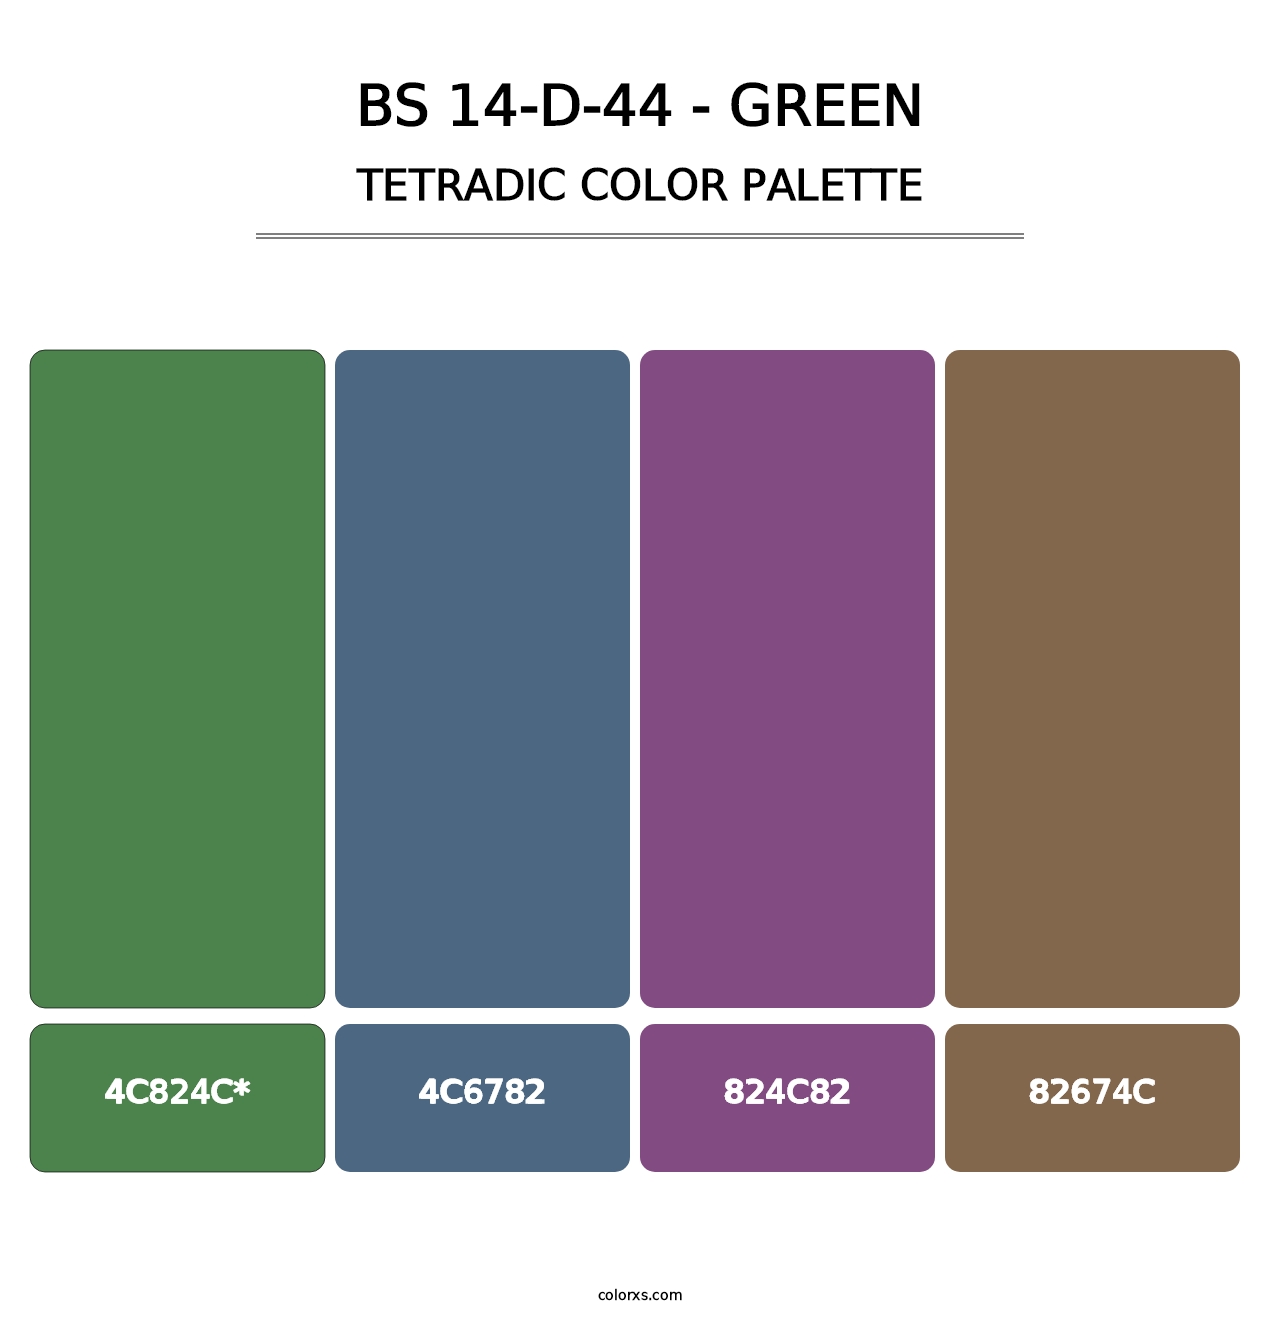 BS 14-D-44 - Green - Tetradic Color Palette